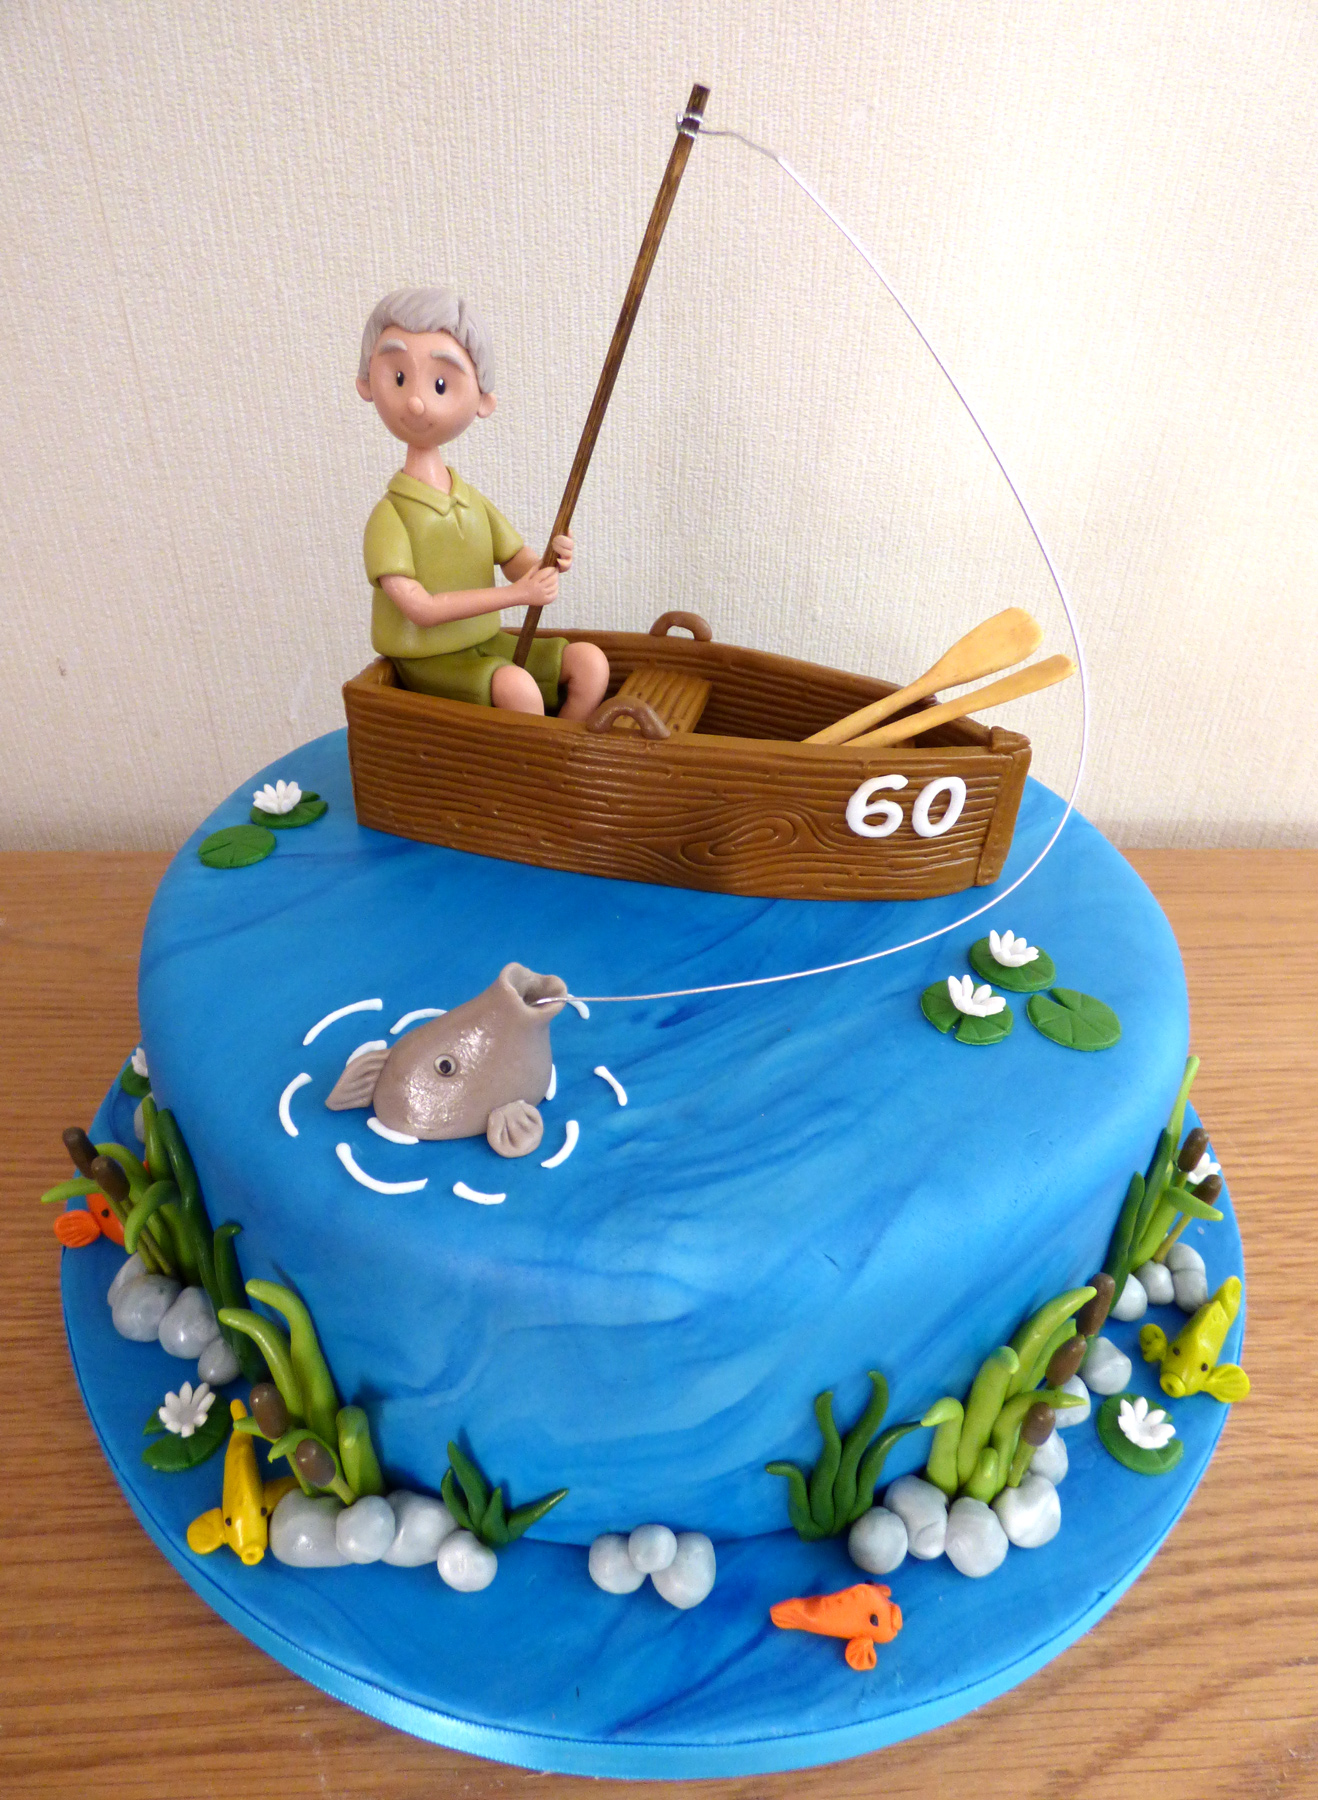 https://www.susies-cakes.co.uk/susies-cakes/wp-content/uploads/2018/07/gone-fishing-birthday-cake-poole-dorset.jpg